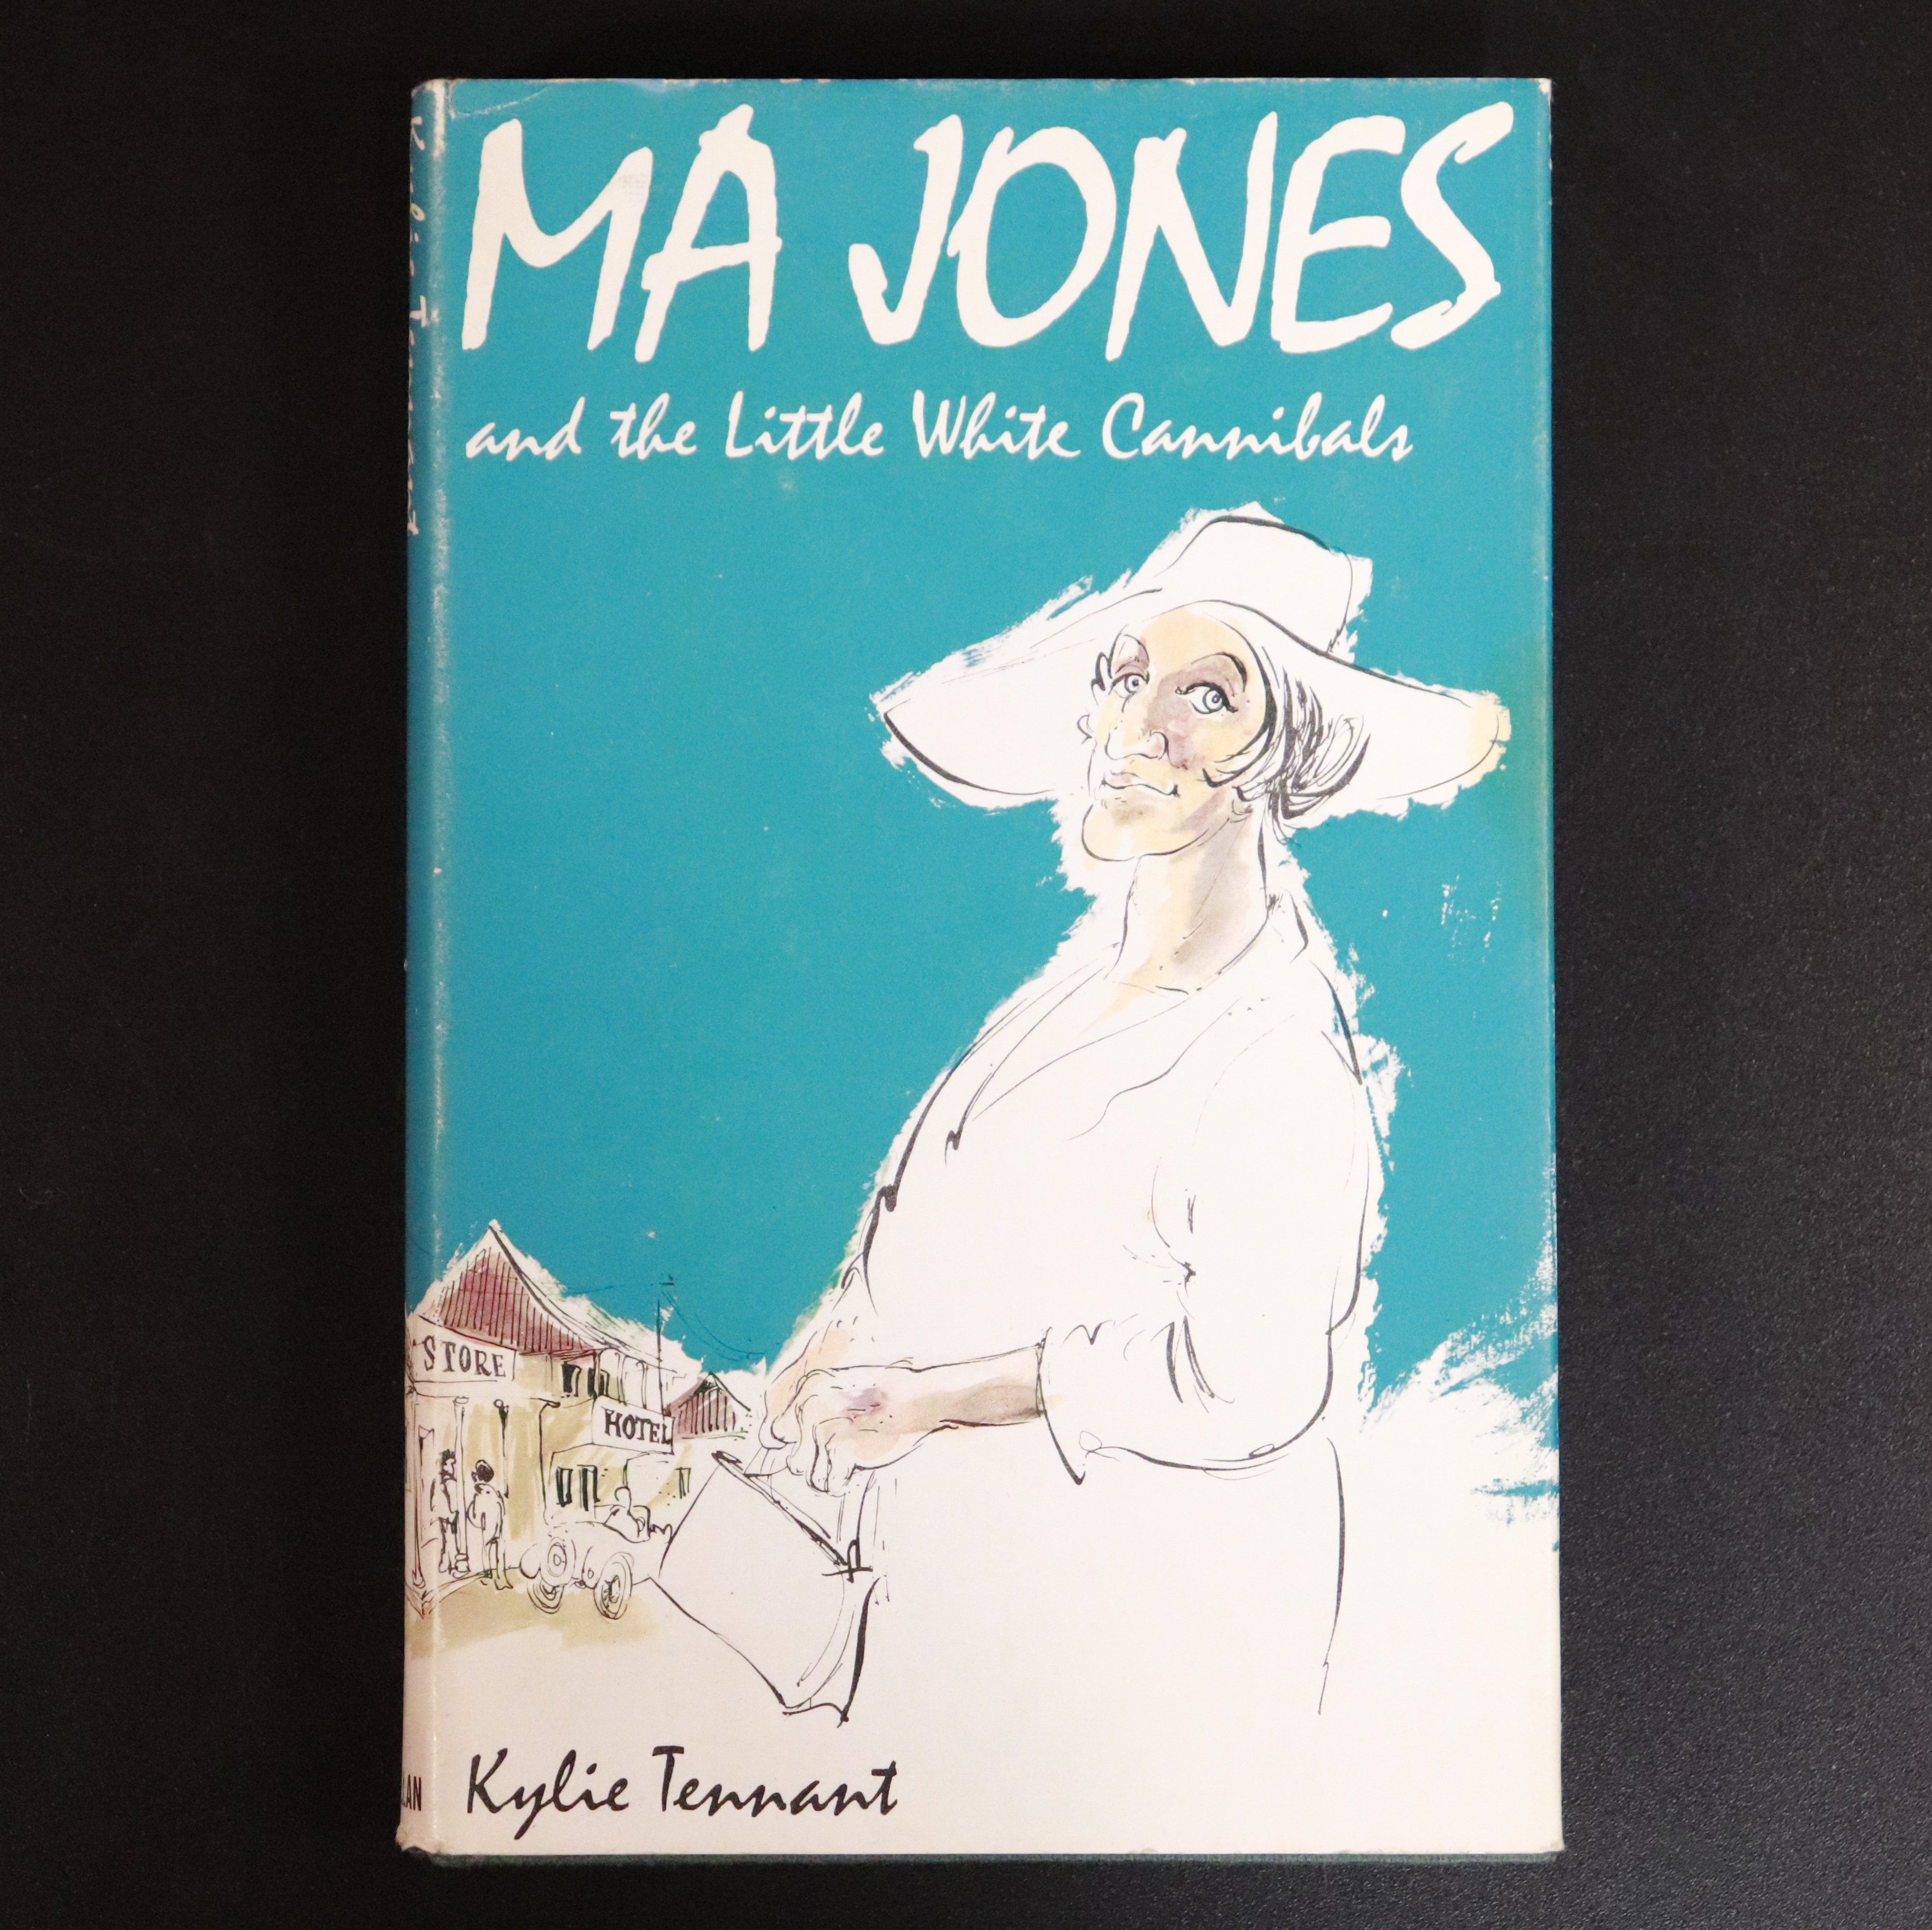 1967 Ma Jones & The Little White Cannibals 1st Edition Australian Fiction Book